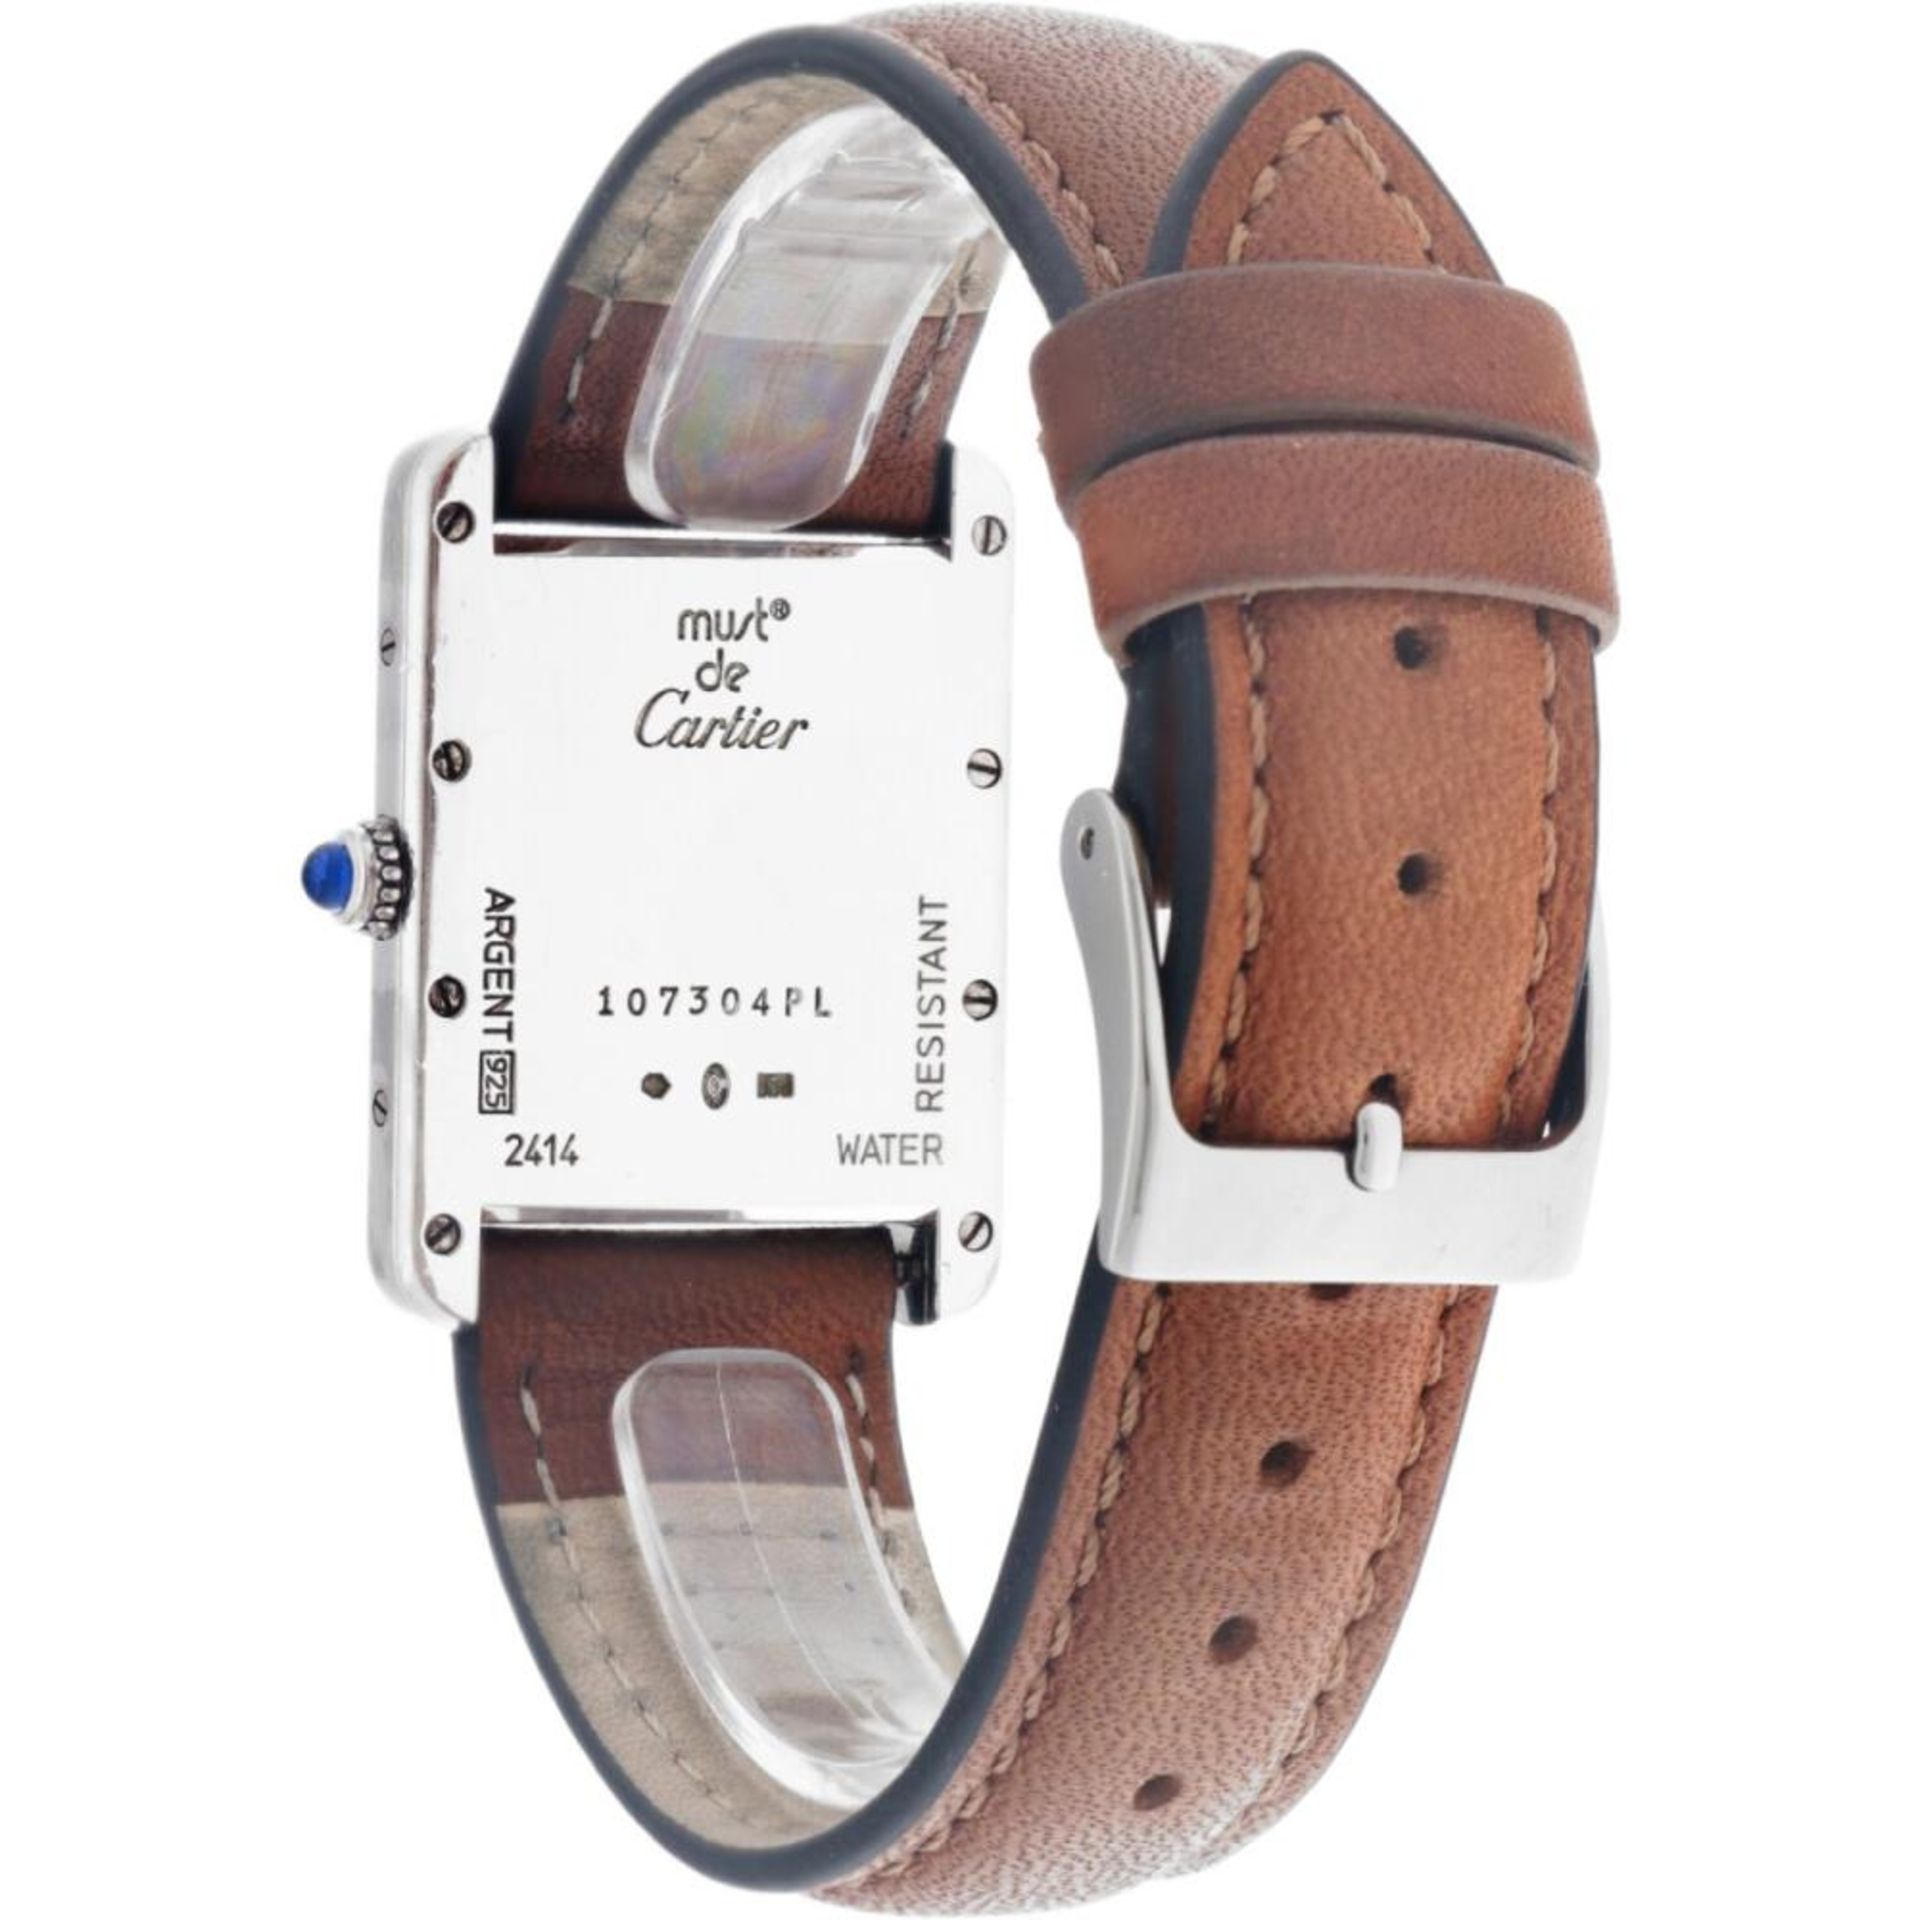 Cartier Tank 2414 - Men's watch - approx. 2000. - Image 3 of 5